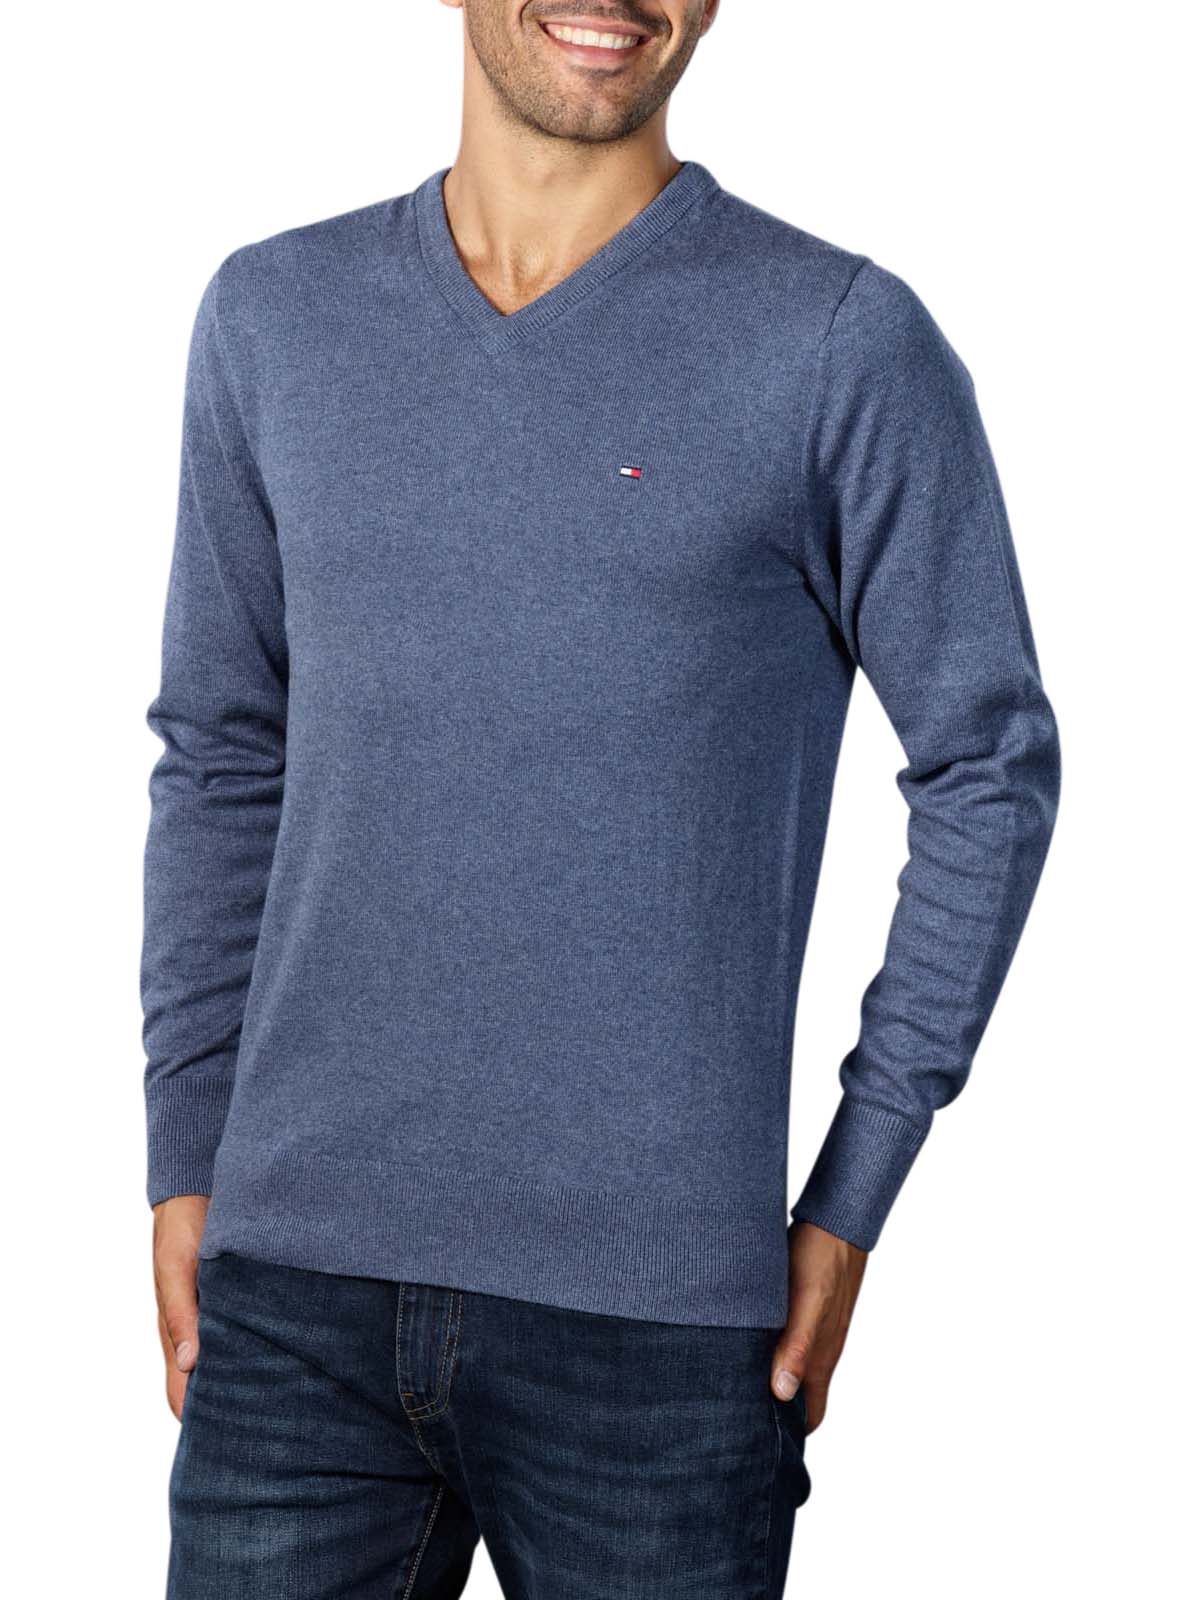 Hilfiger Pima Cotton Cashmere faded indigo Hilfiger Men's Sweater | Free Shipping on BEBASIC.CH SIMPLY LOOK GOOD